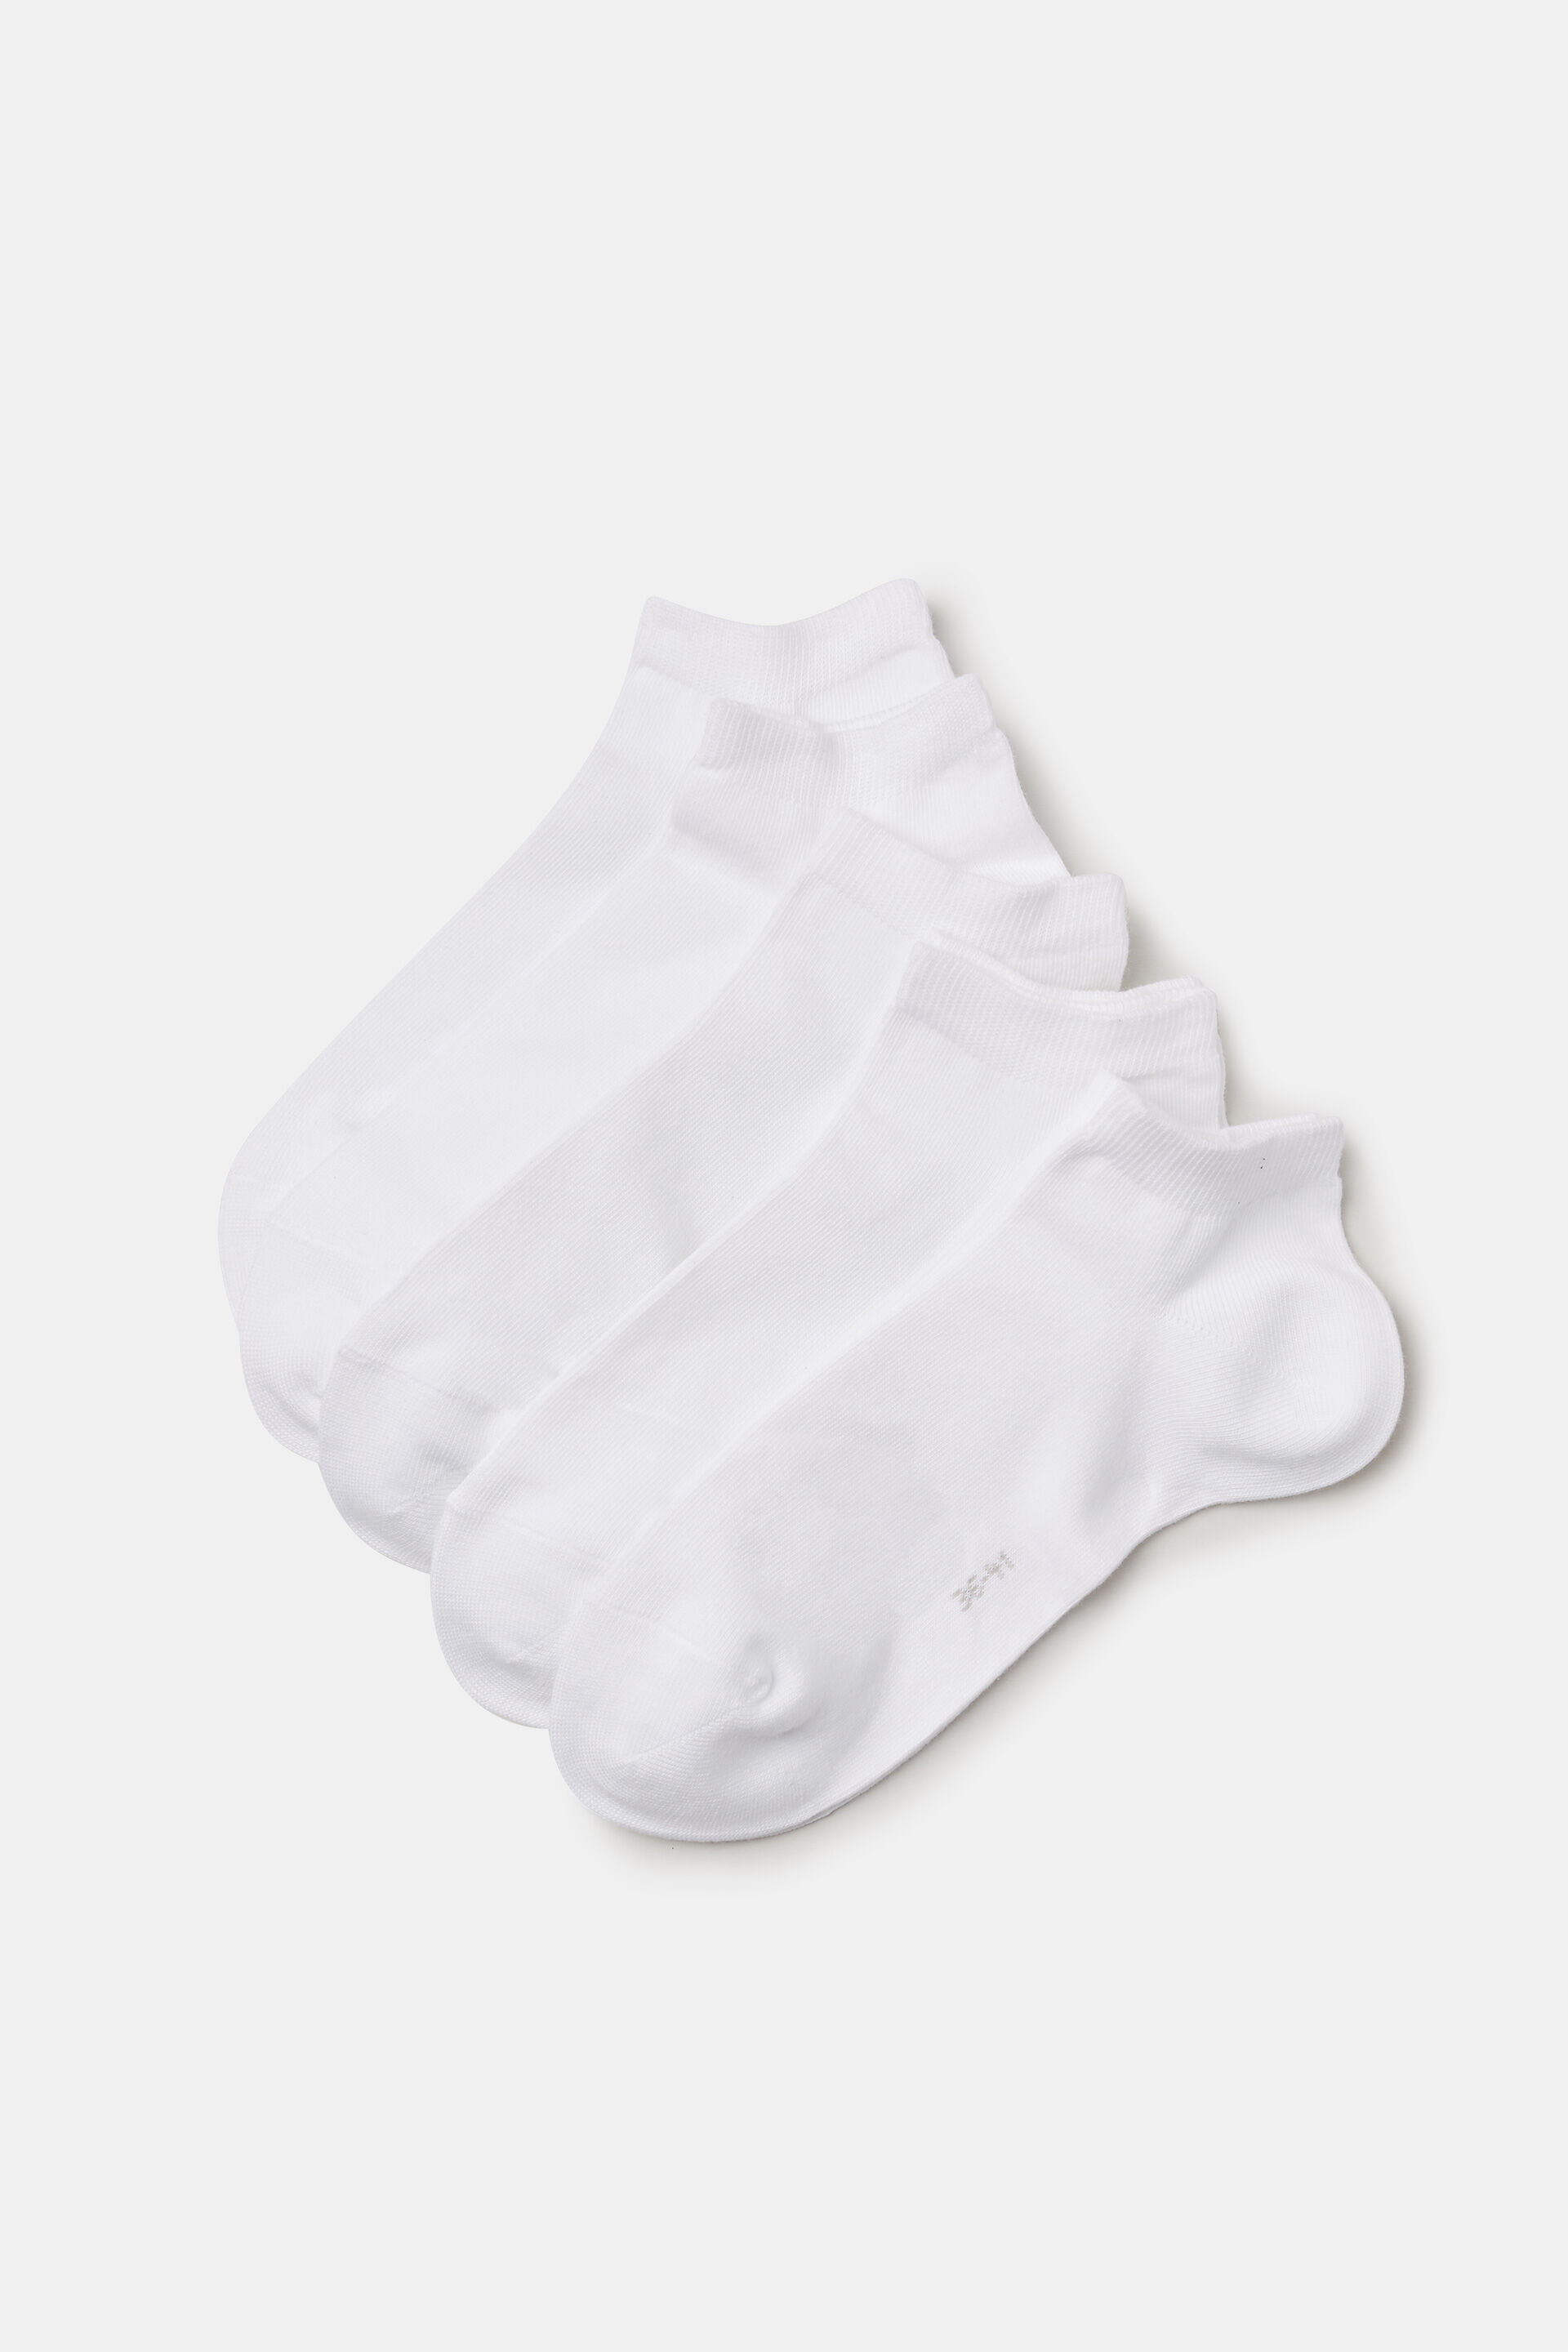 Esprit cotton pack 5-pair socks blended of